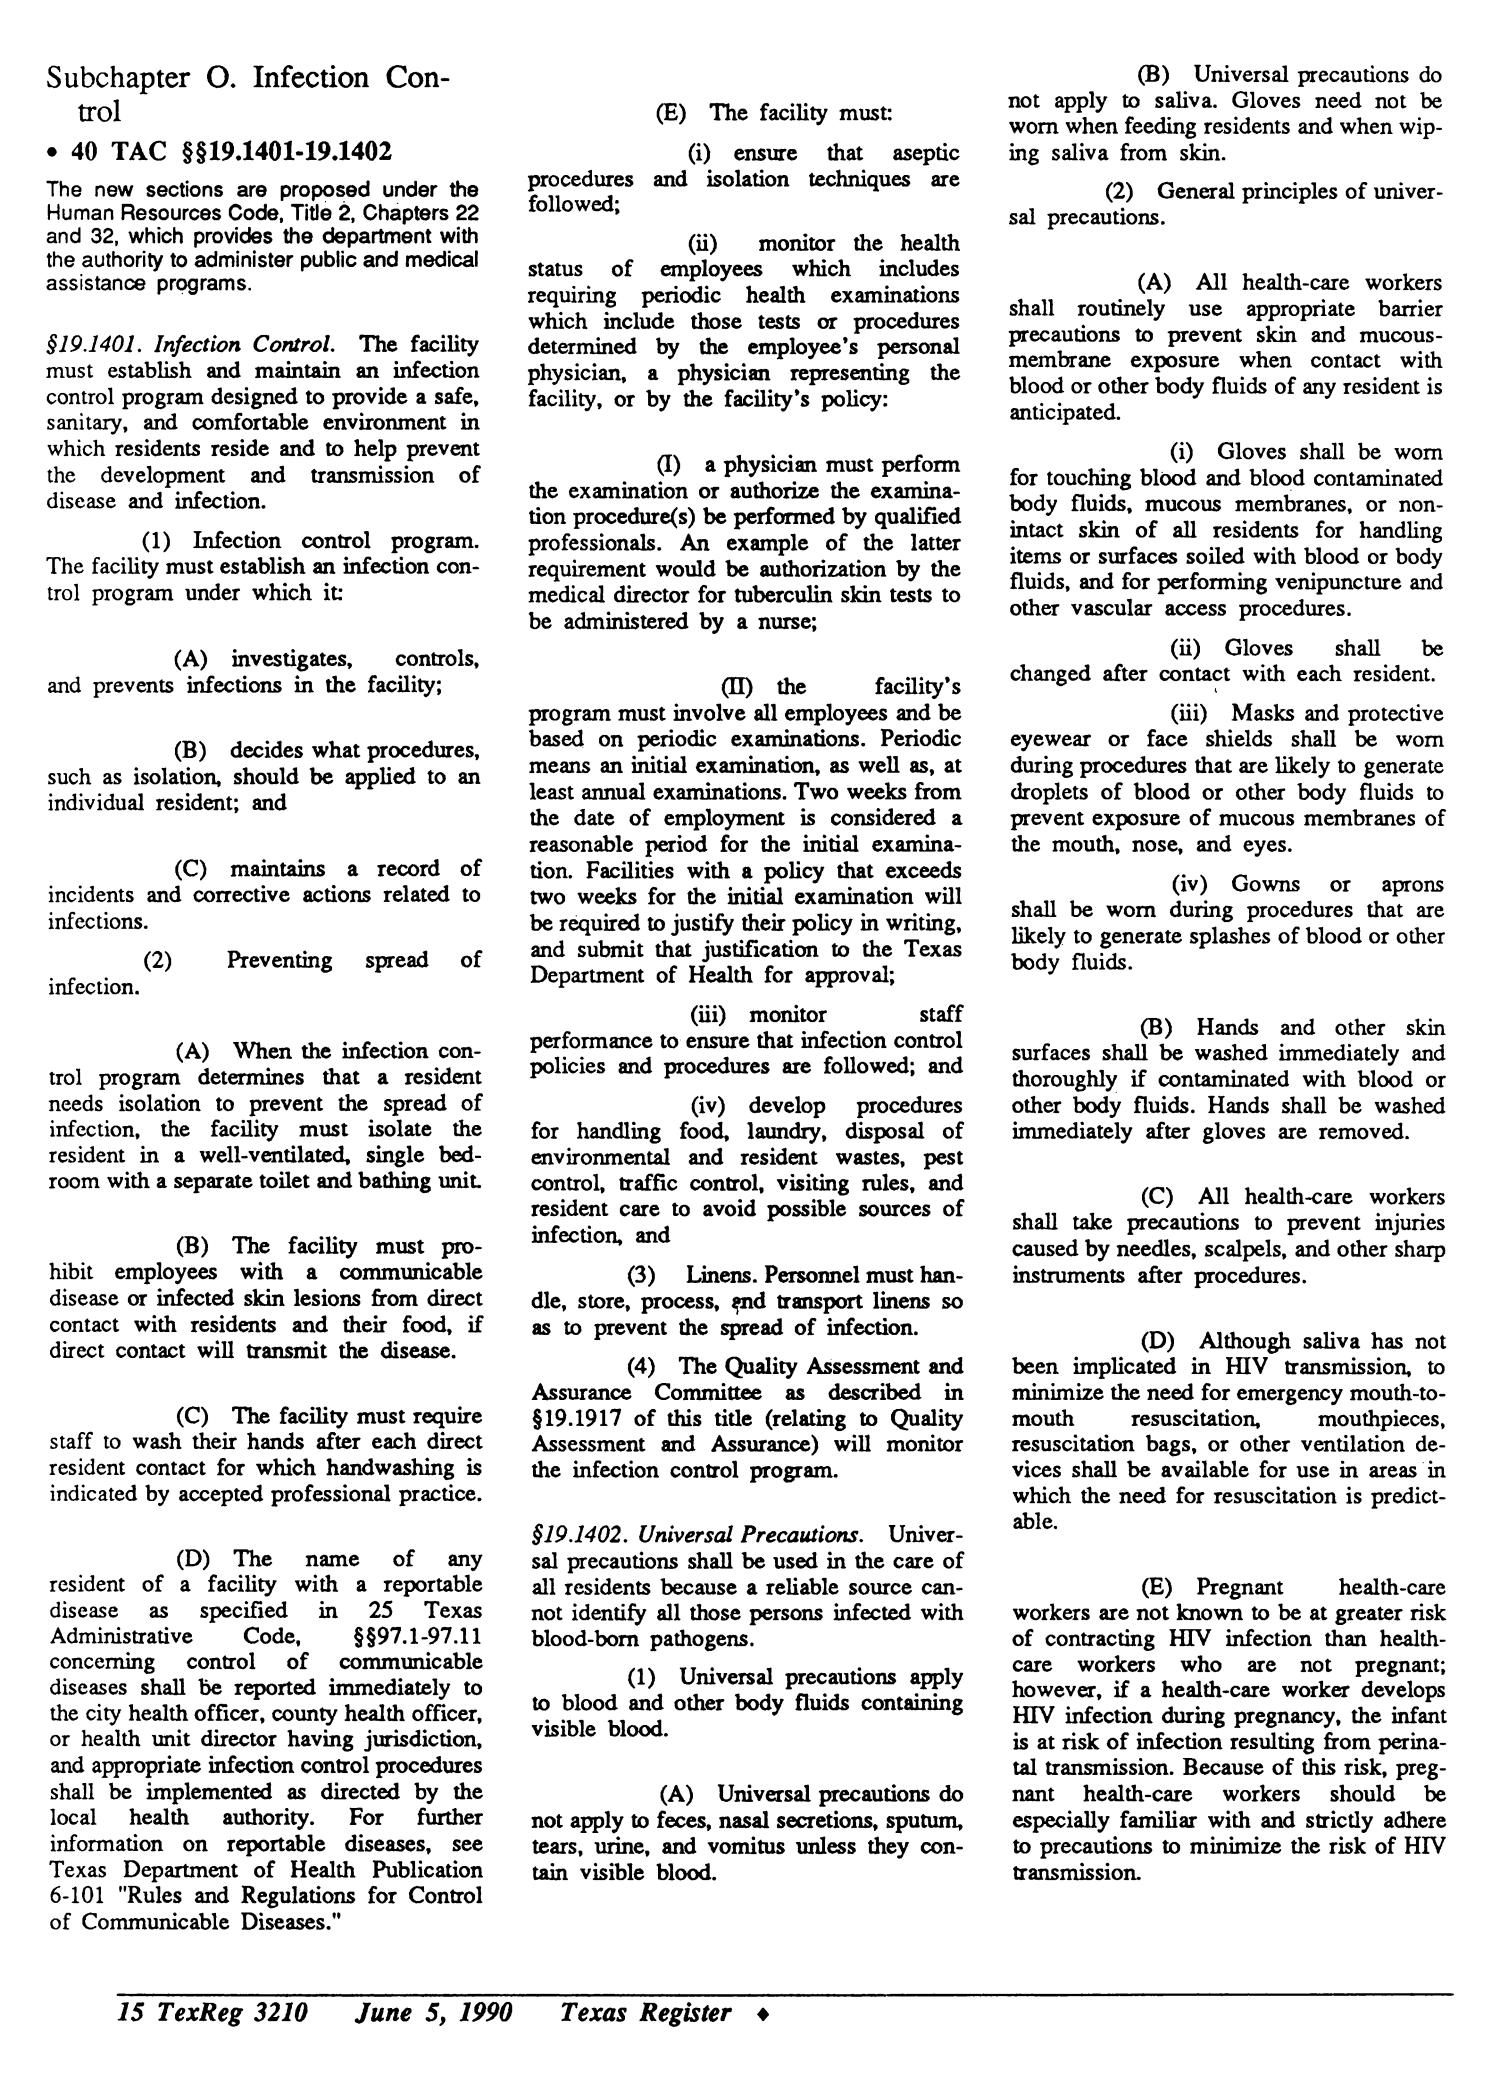 Texas Register, Volume 15, Number 42, (Volume II)Pages 3121-3269, June 5, 1990
                                                
                                                    3210
                                                